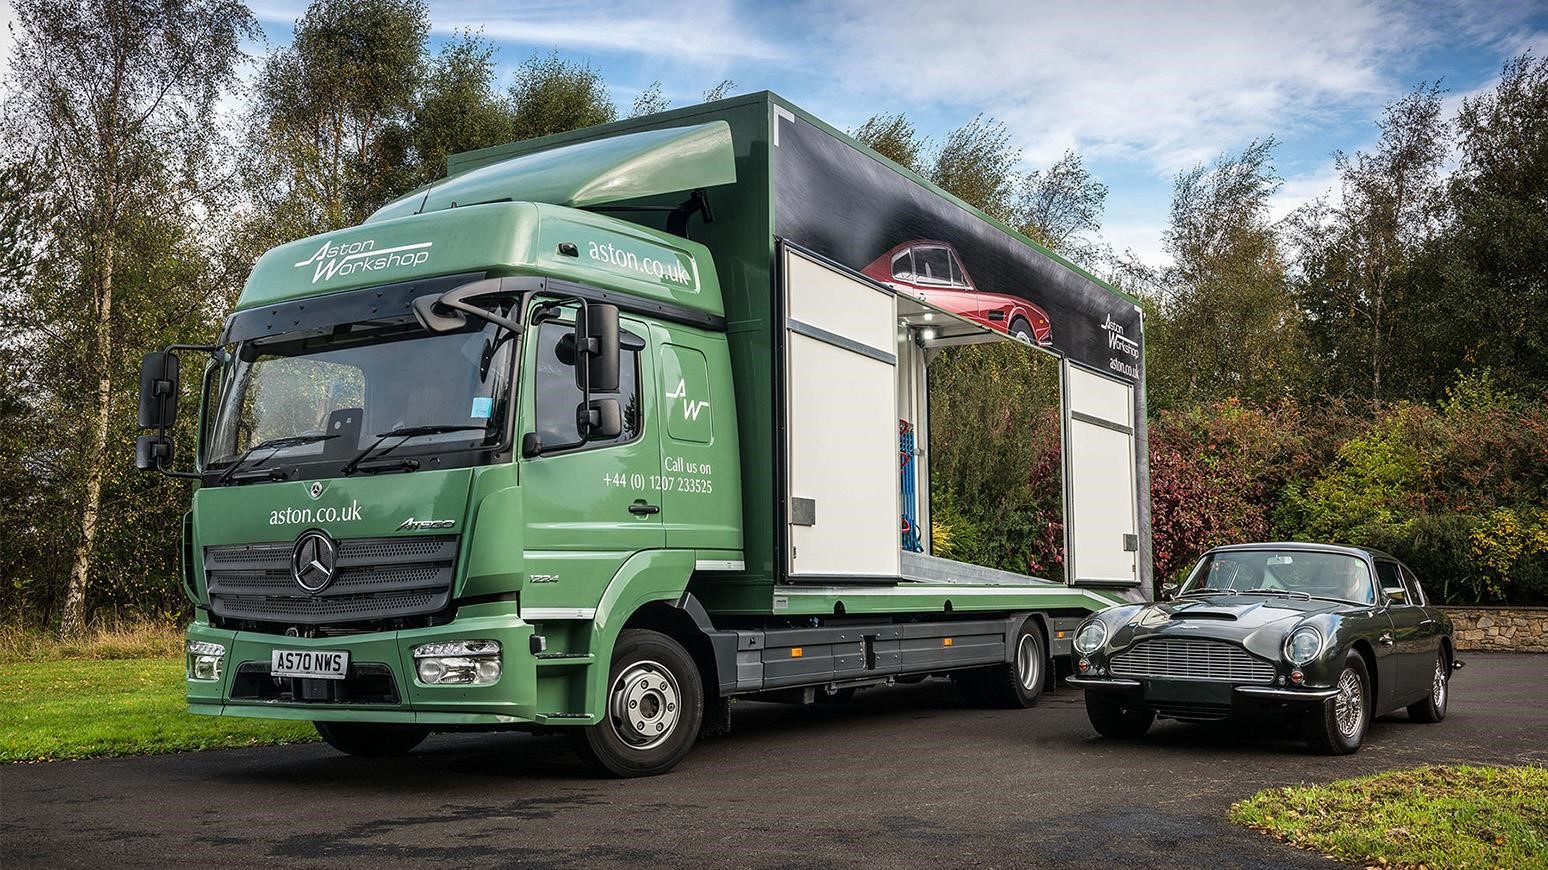 New Mercedes-Benz Atego 1224 Custom-Built To Transport Aston Martin Vehicles